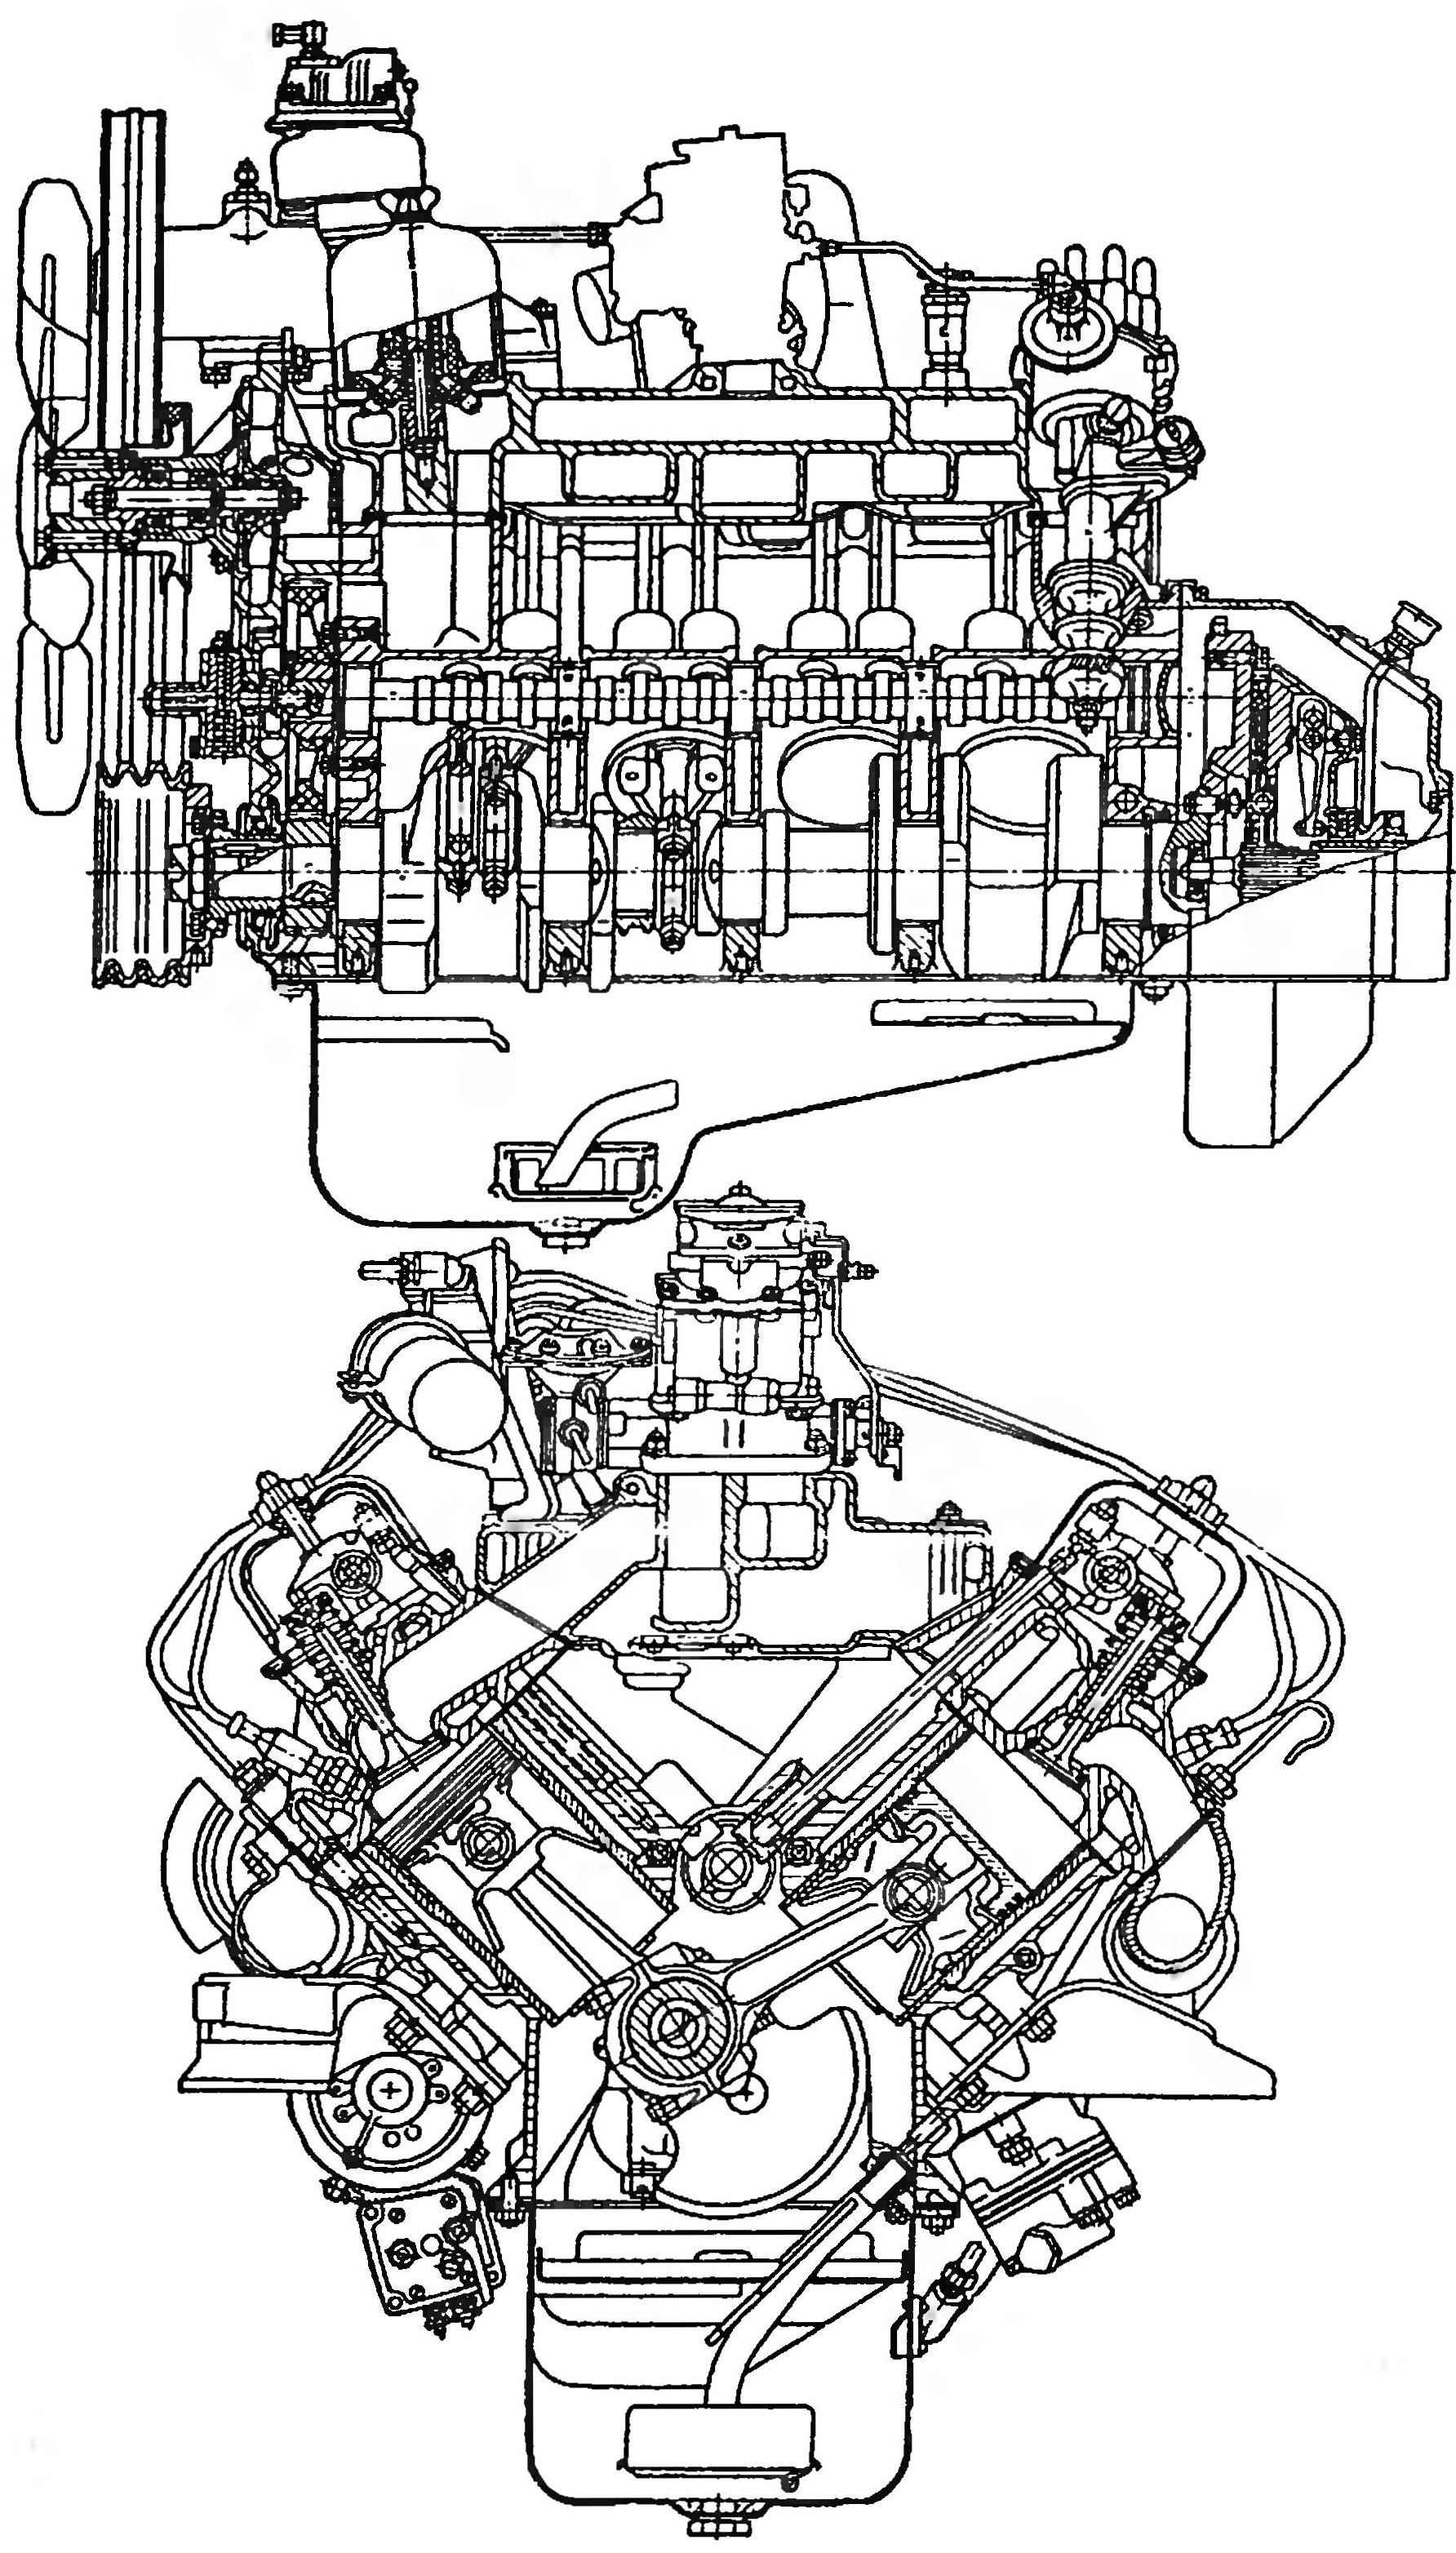 The engine ZMZ-53